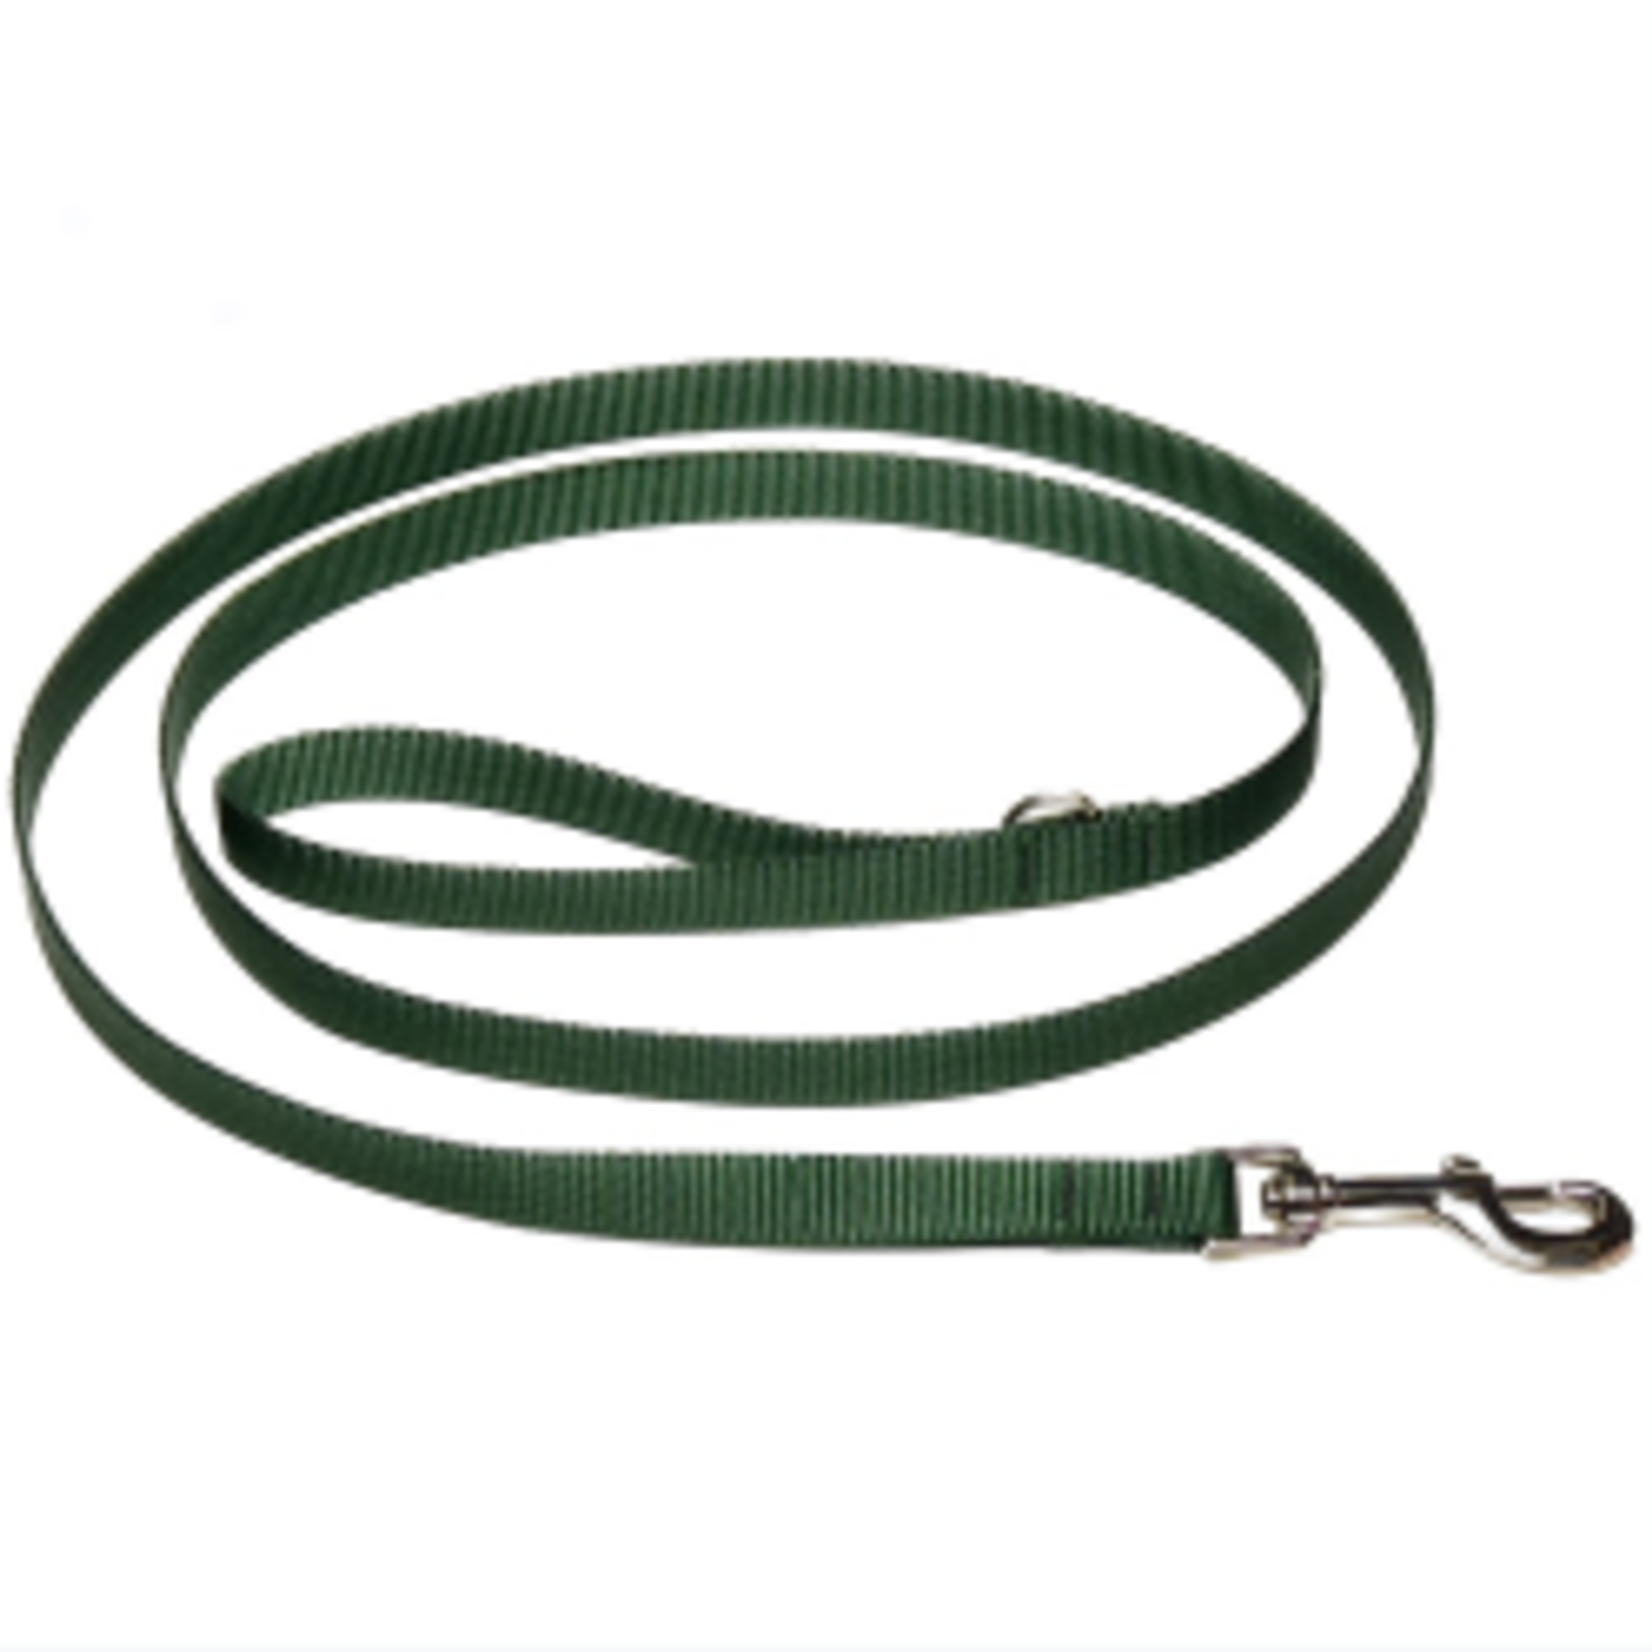 Hunter Brand Nylon leash - 1 in x 6 ft